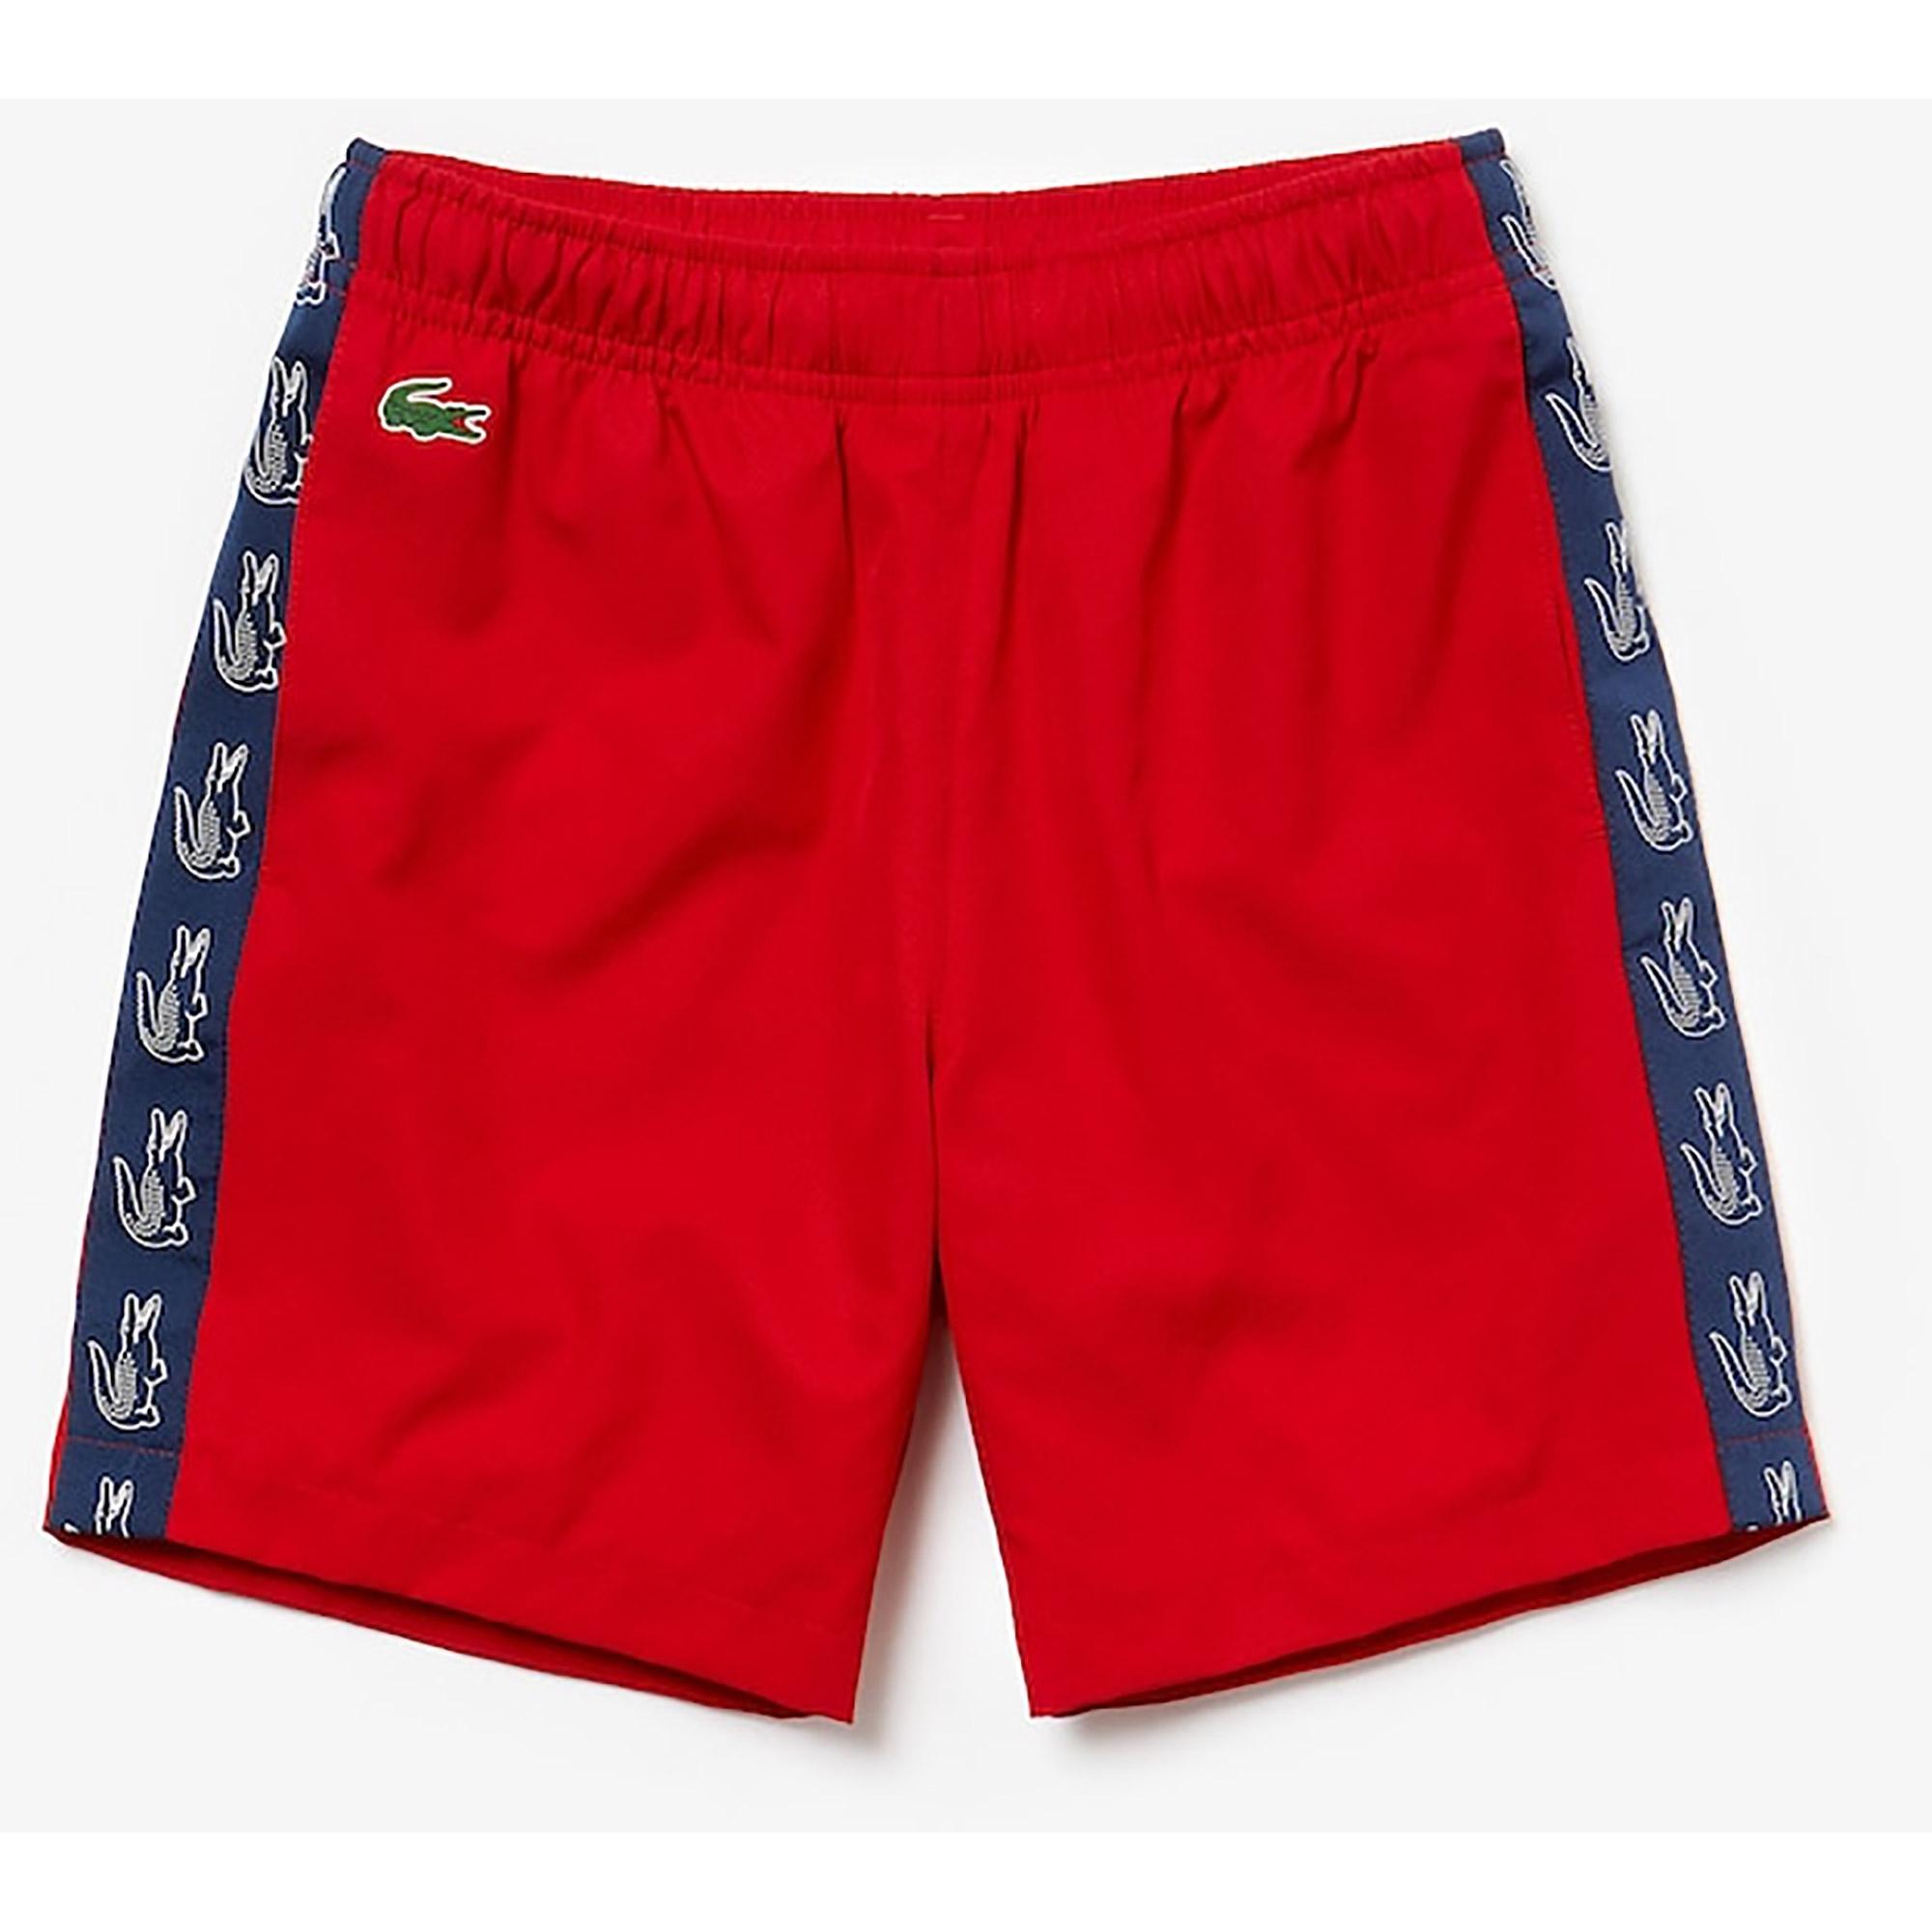 Lacoste Kids Tennis Shorts - Red/Navy Blue - Tennisnuts.com